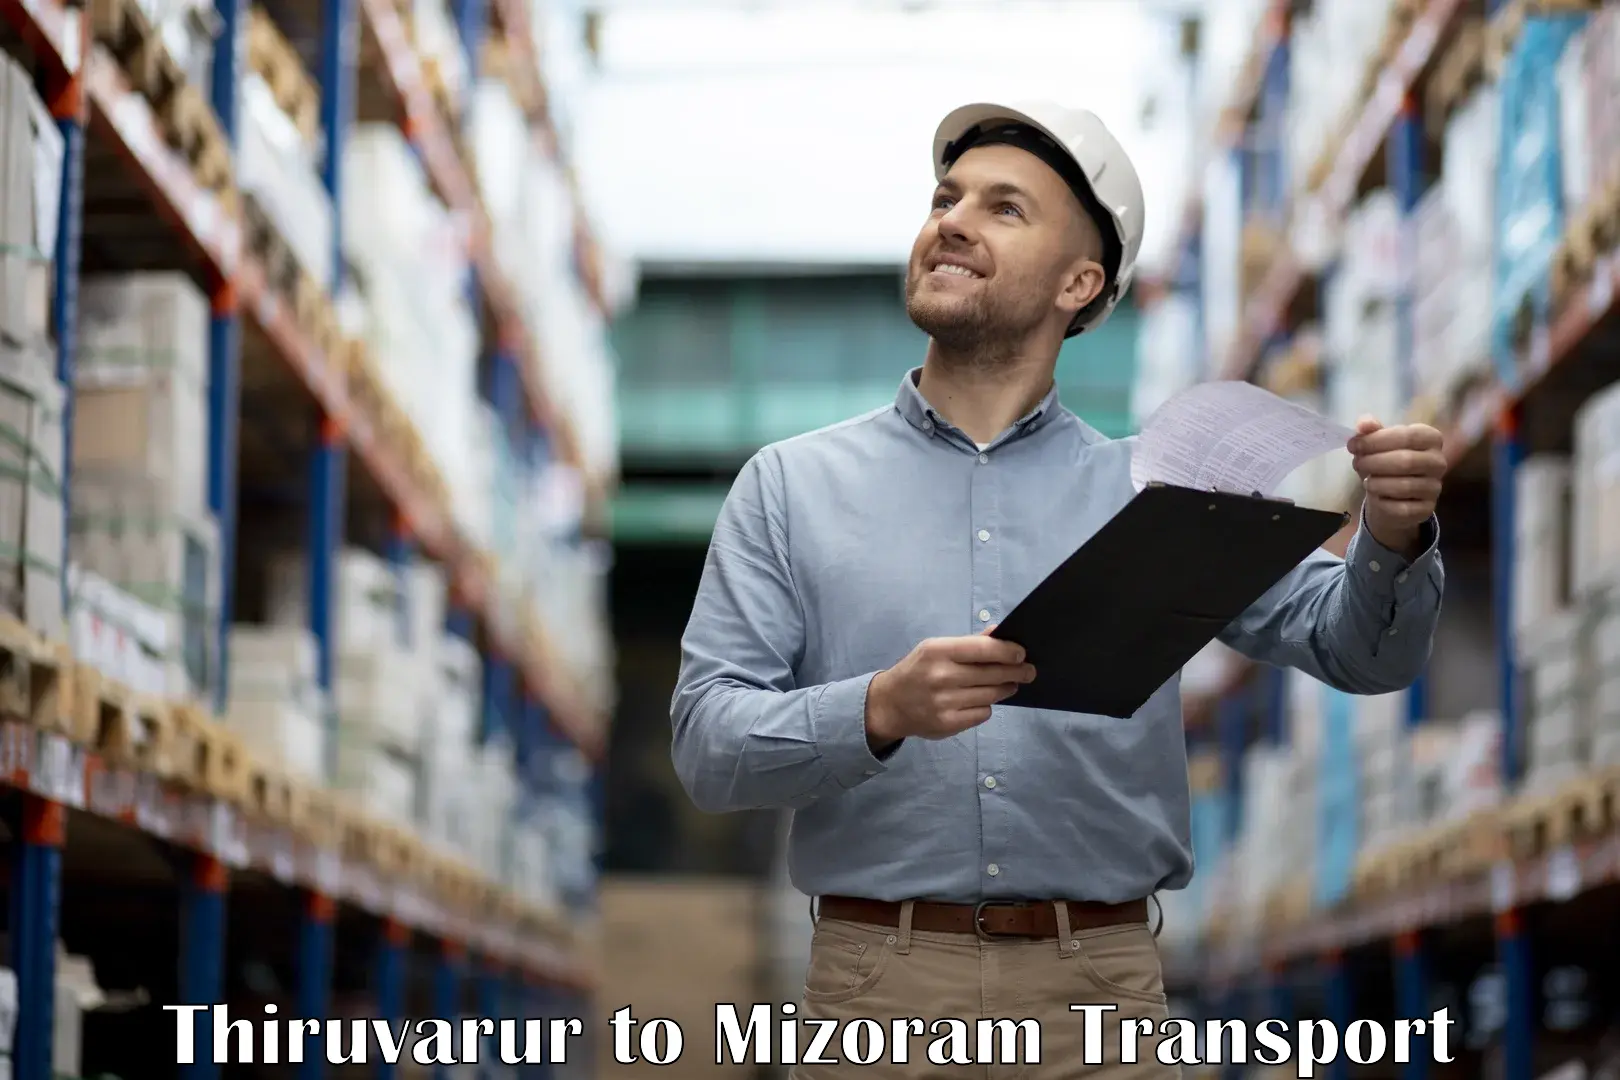 Transport in sharing Thiruvarur to Mizoram